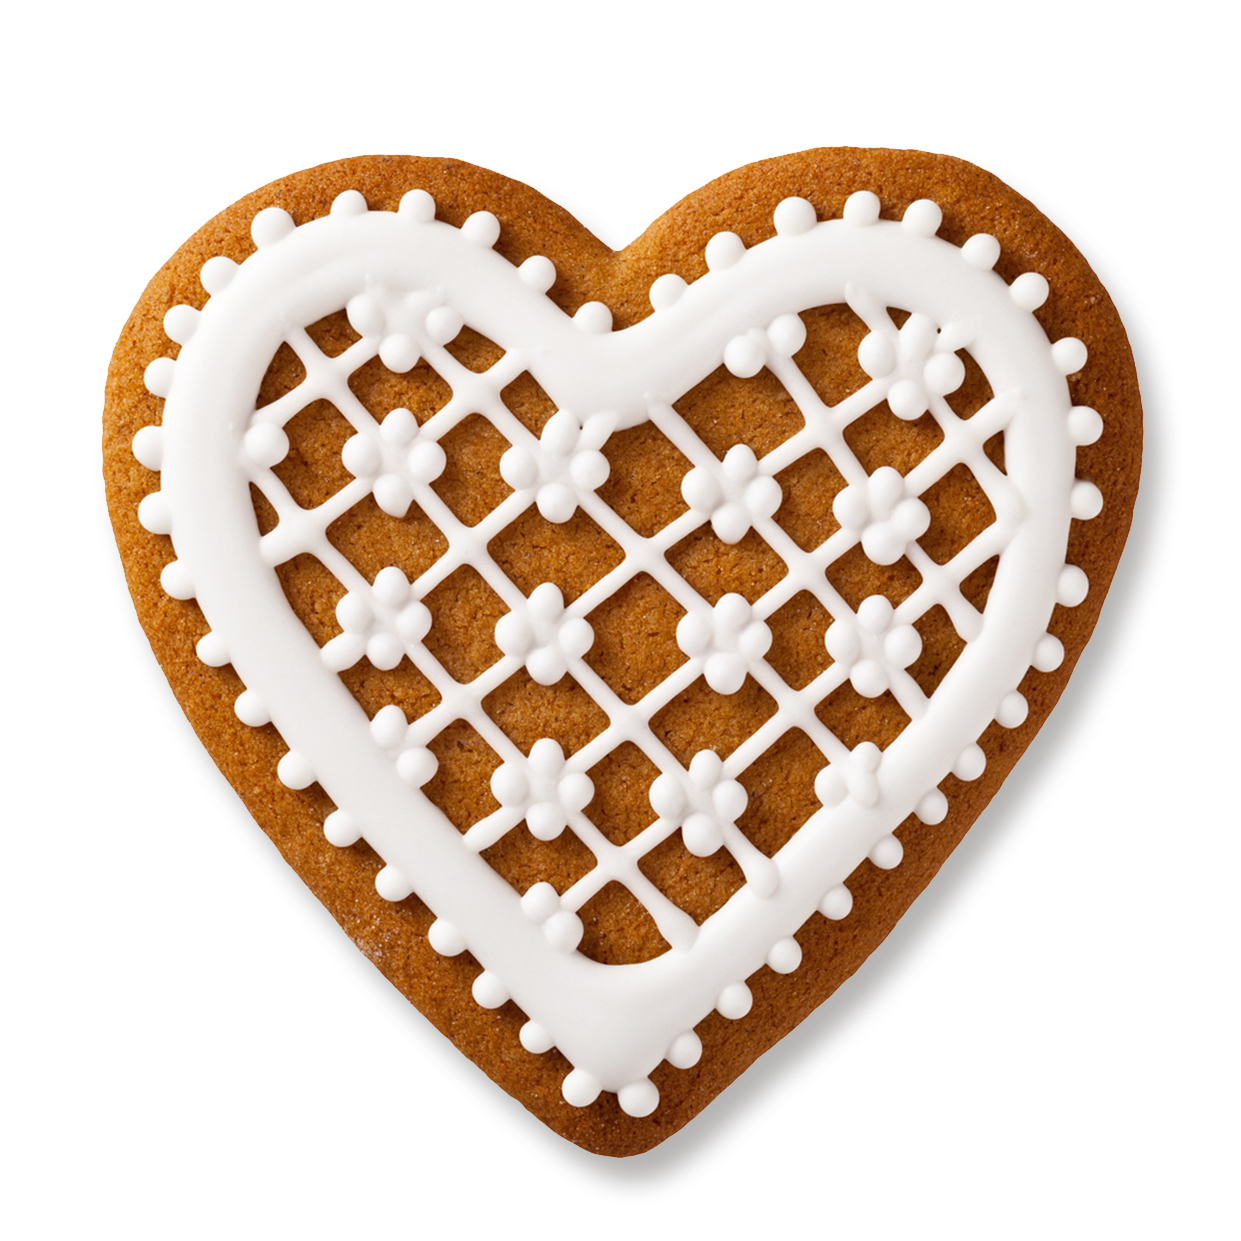 Gingerbread Heart - sent on December 25th, 2021